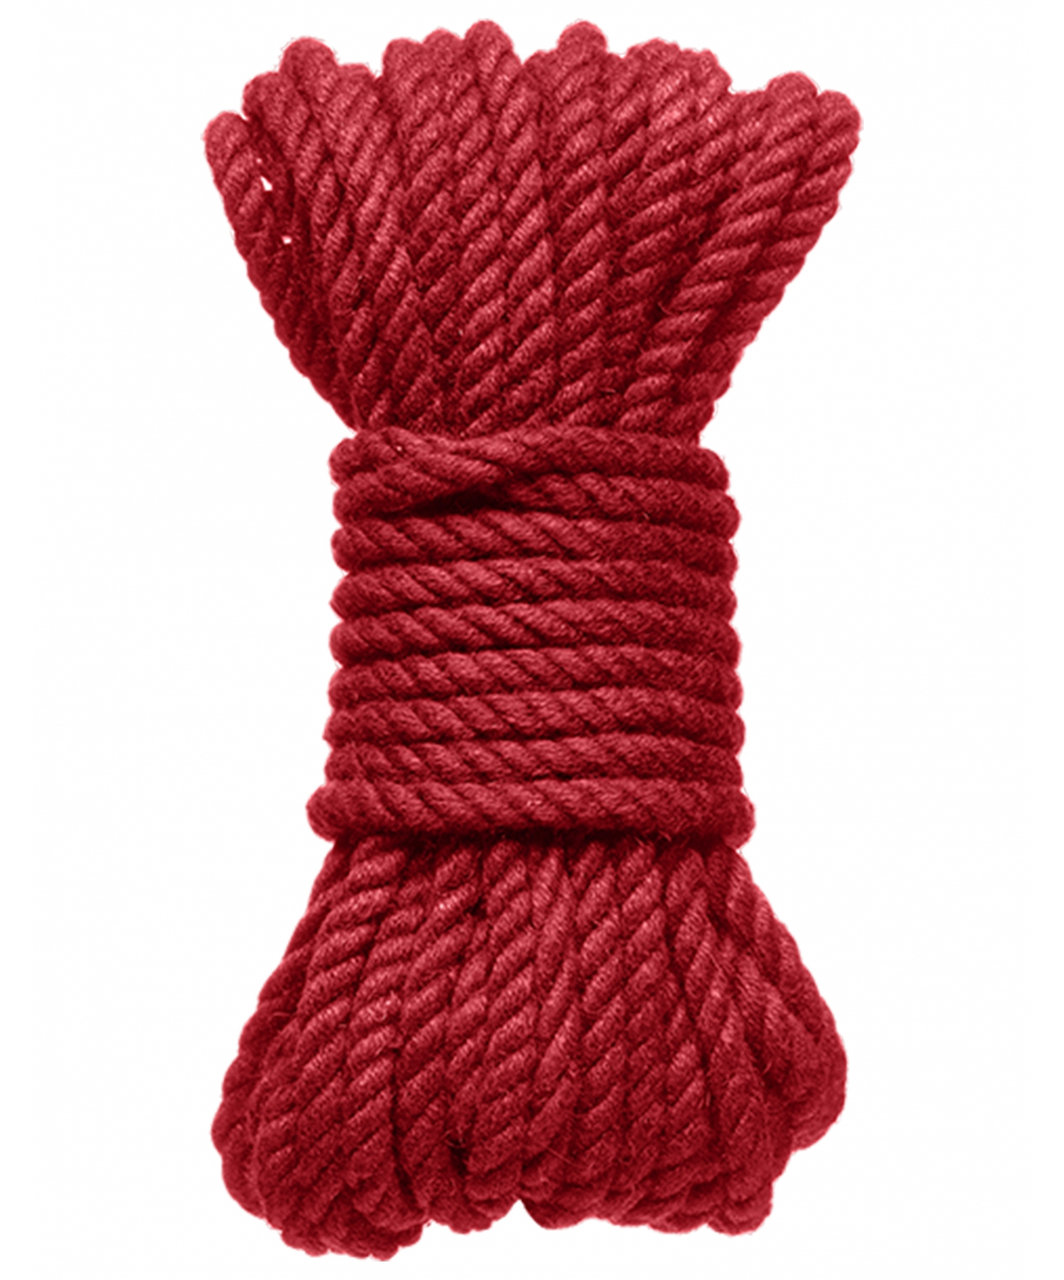 Kink Red Hemp Bondage Rope (9 m)